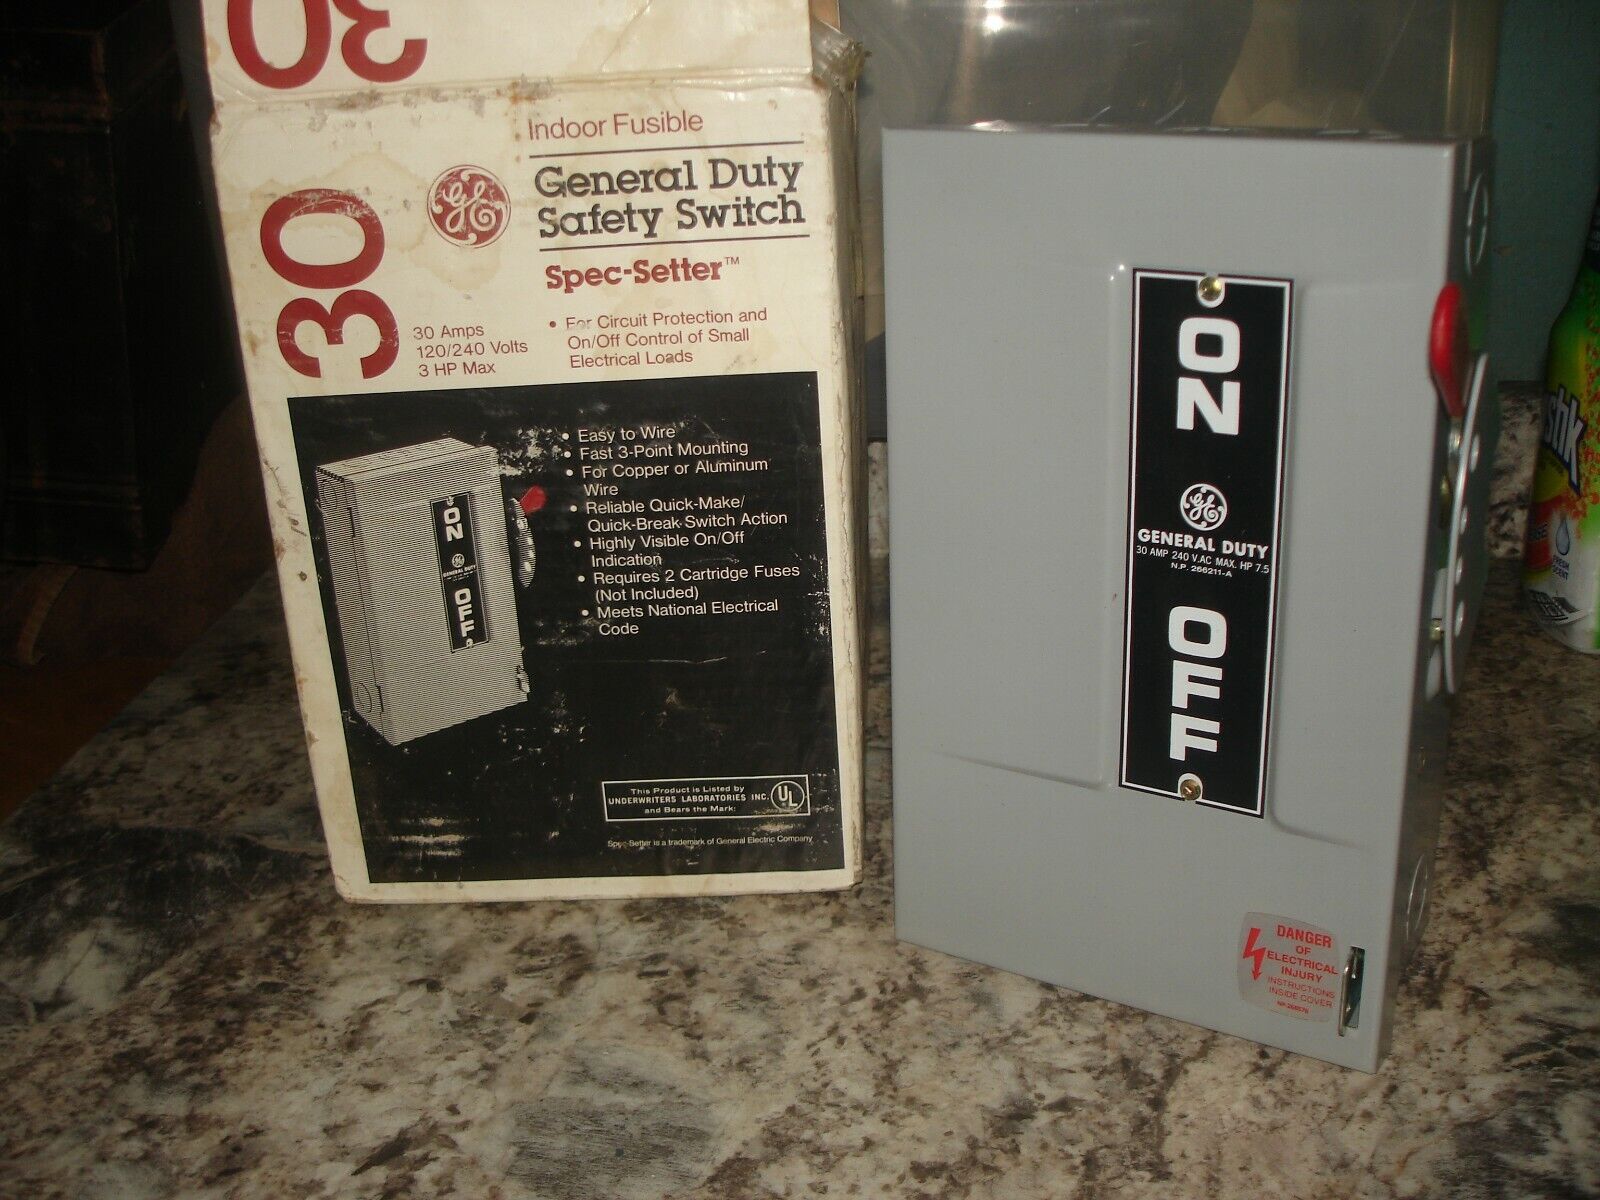 GE General Duty Safety Switch 30 Amp spec-setter in box tg3221cp Bin 987 